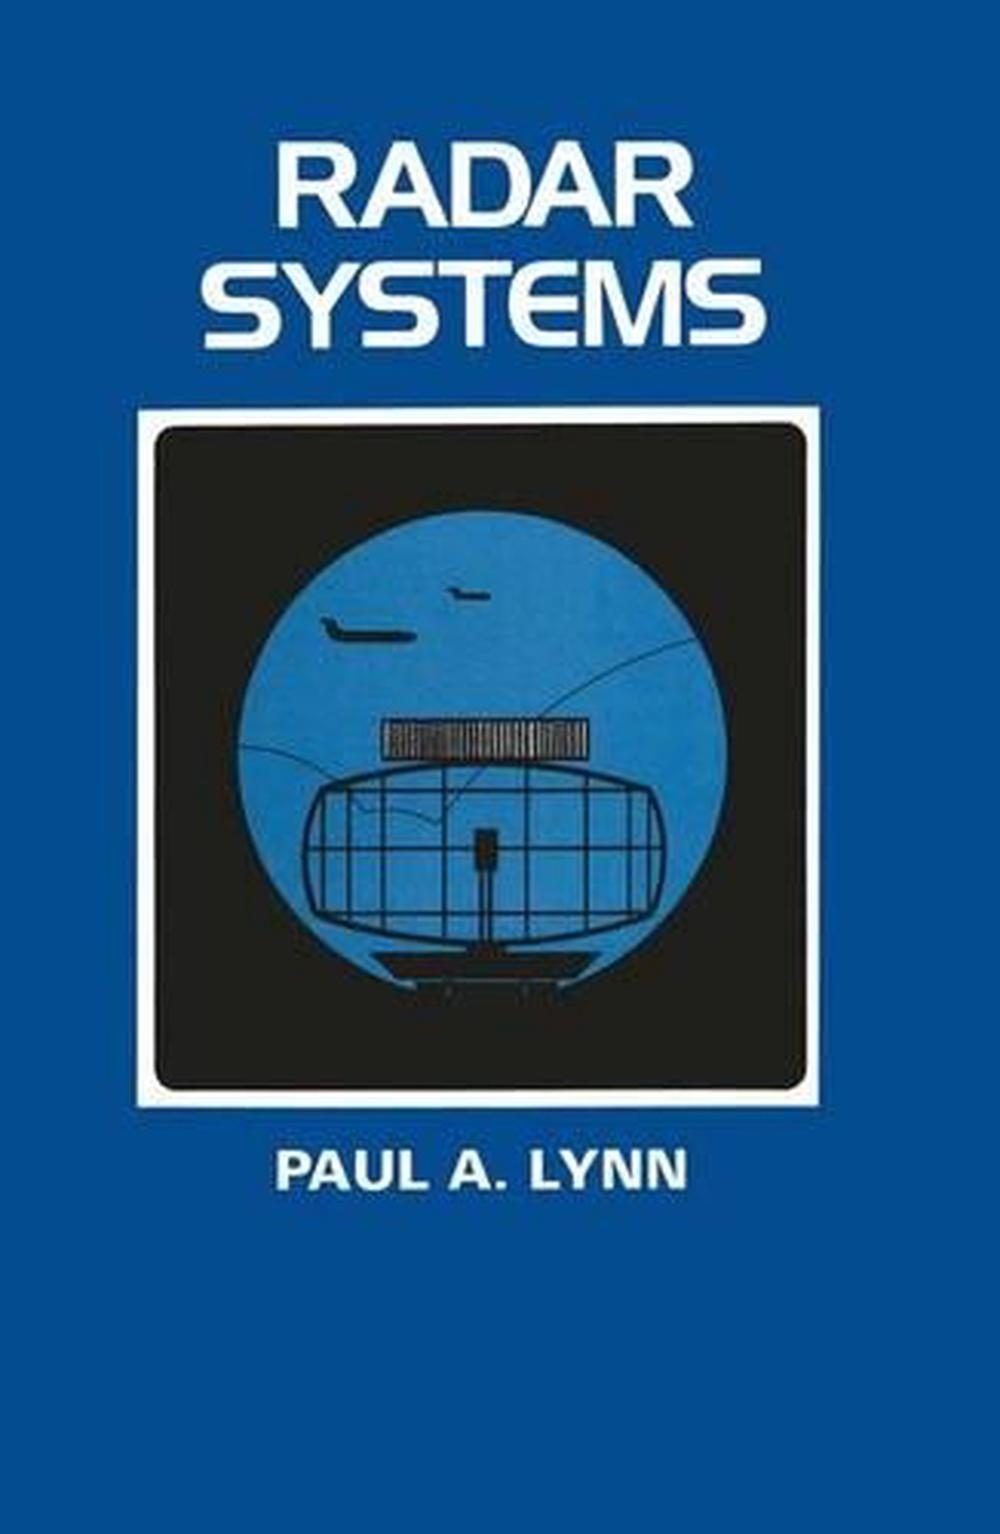 Radar Systems by Paul A. Lynn (English) Paperback Book Free Shipping